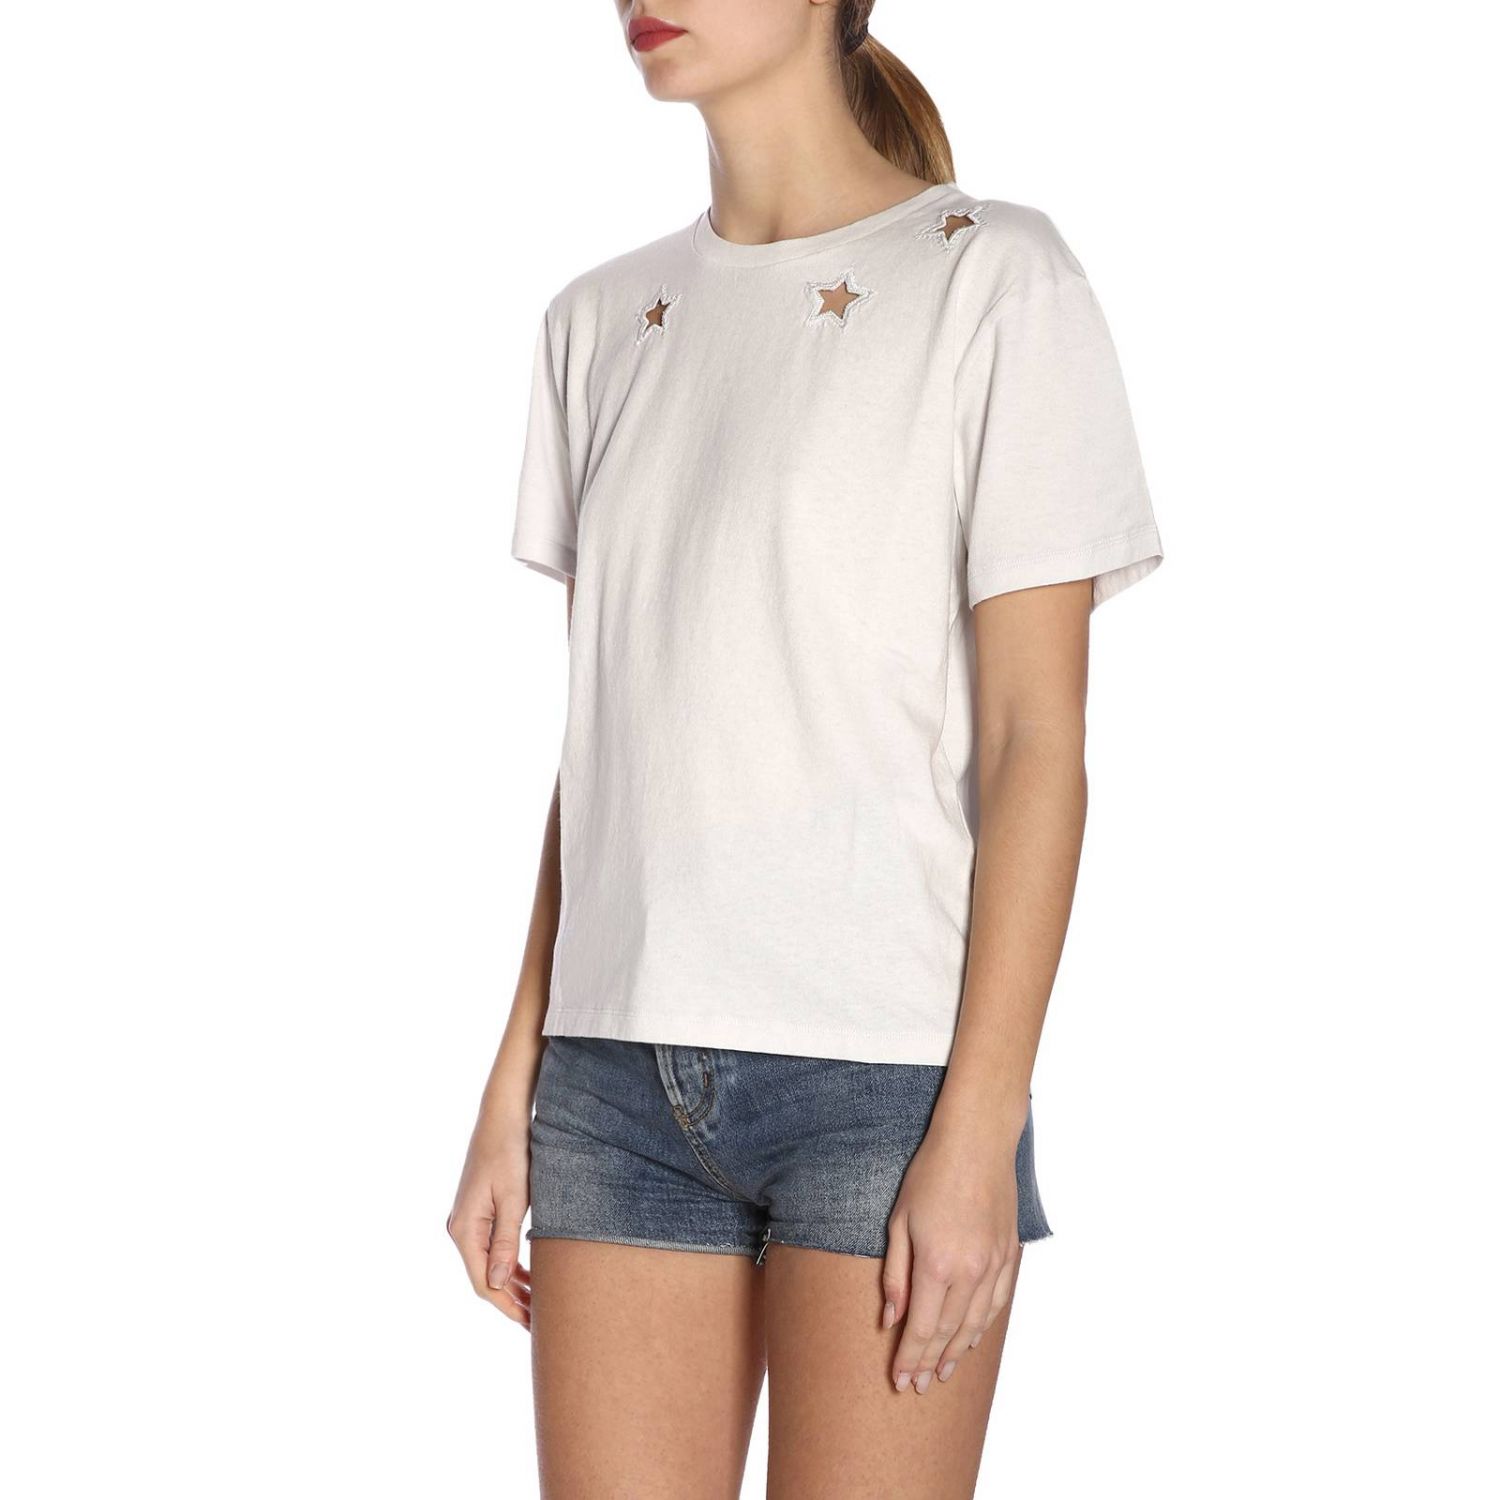 SAINT LAURENT: T-shirt women | T-Shirt Saint Laurent Women White | T